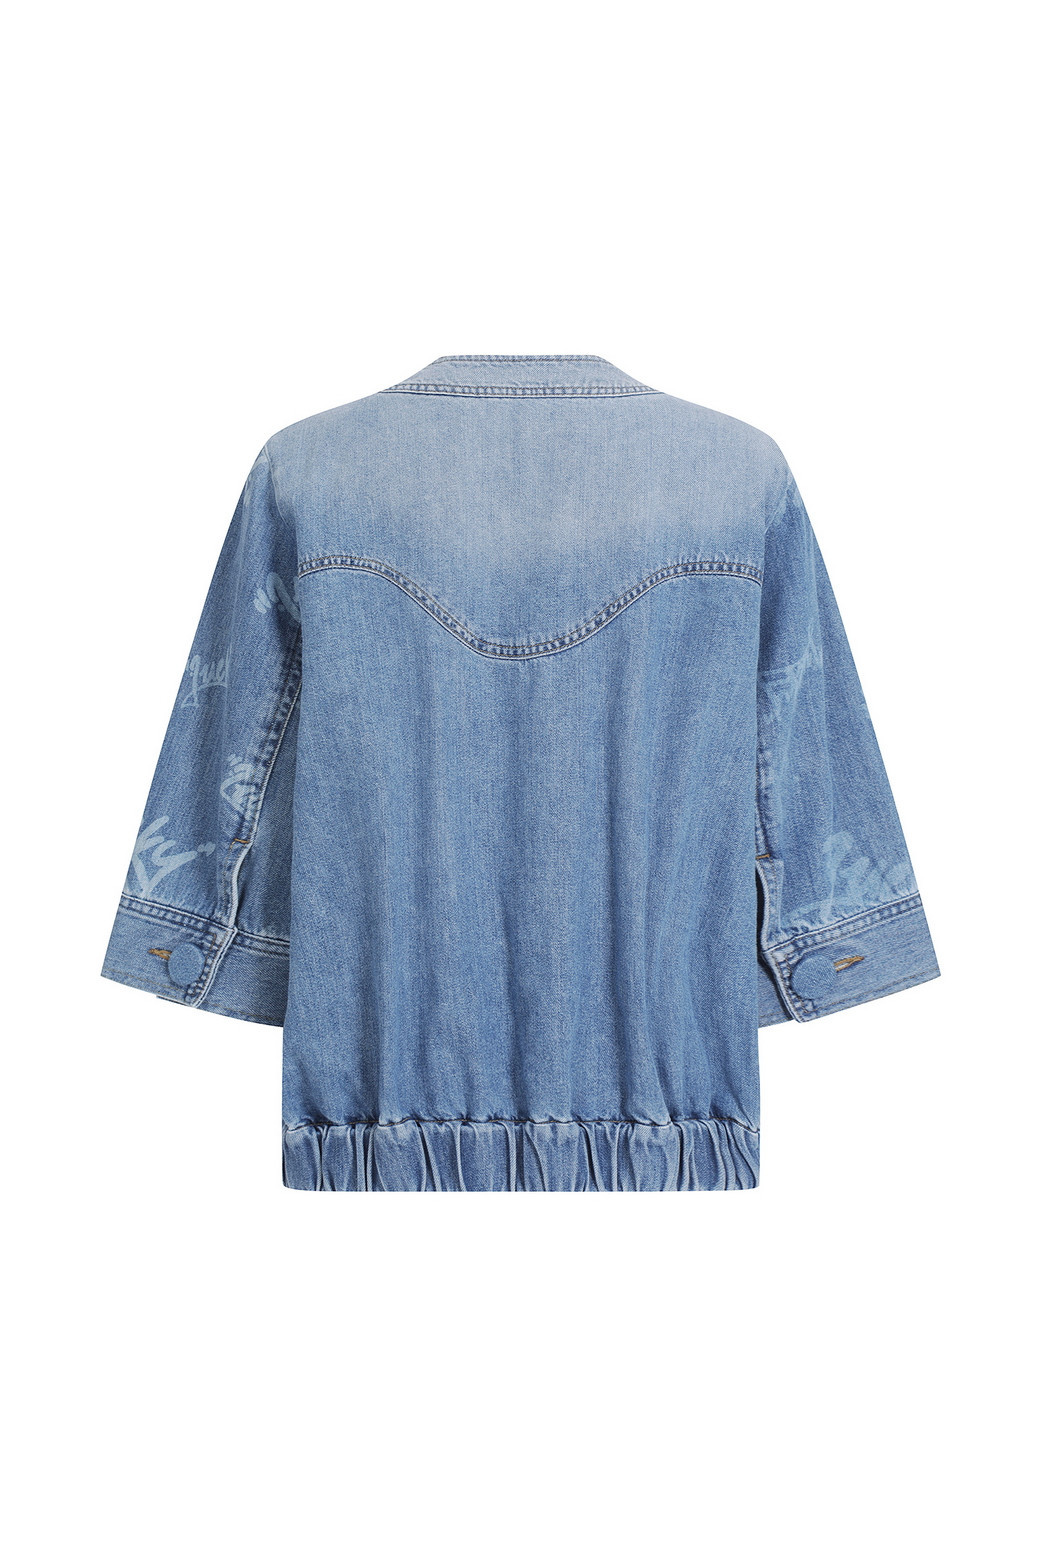 Fordocks' denim jacket, Blue Magnolia Elephants design – Luchie